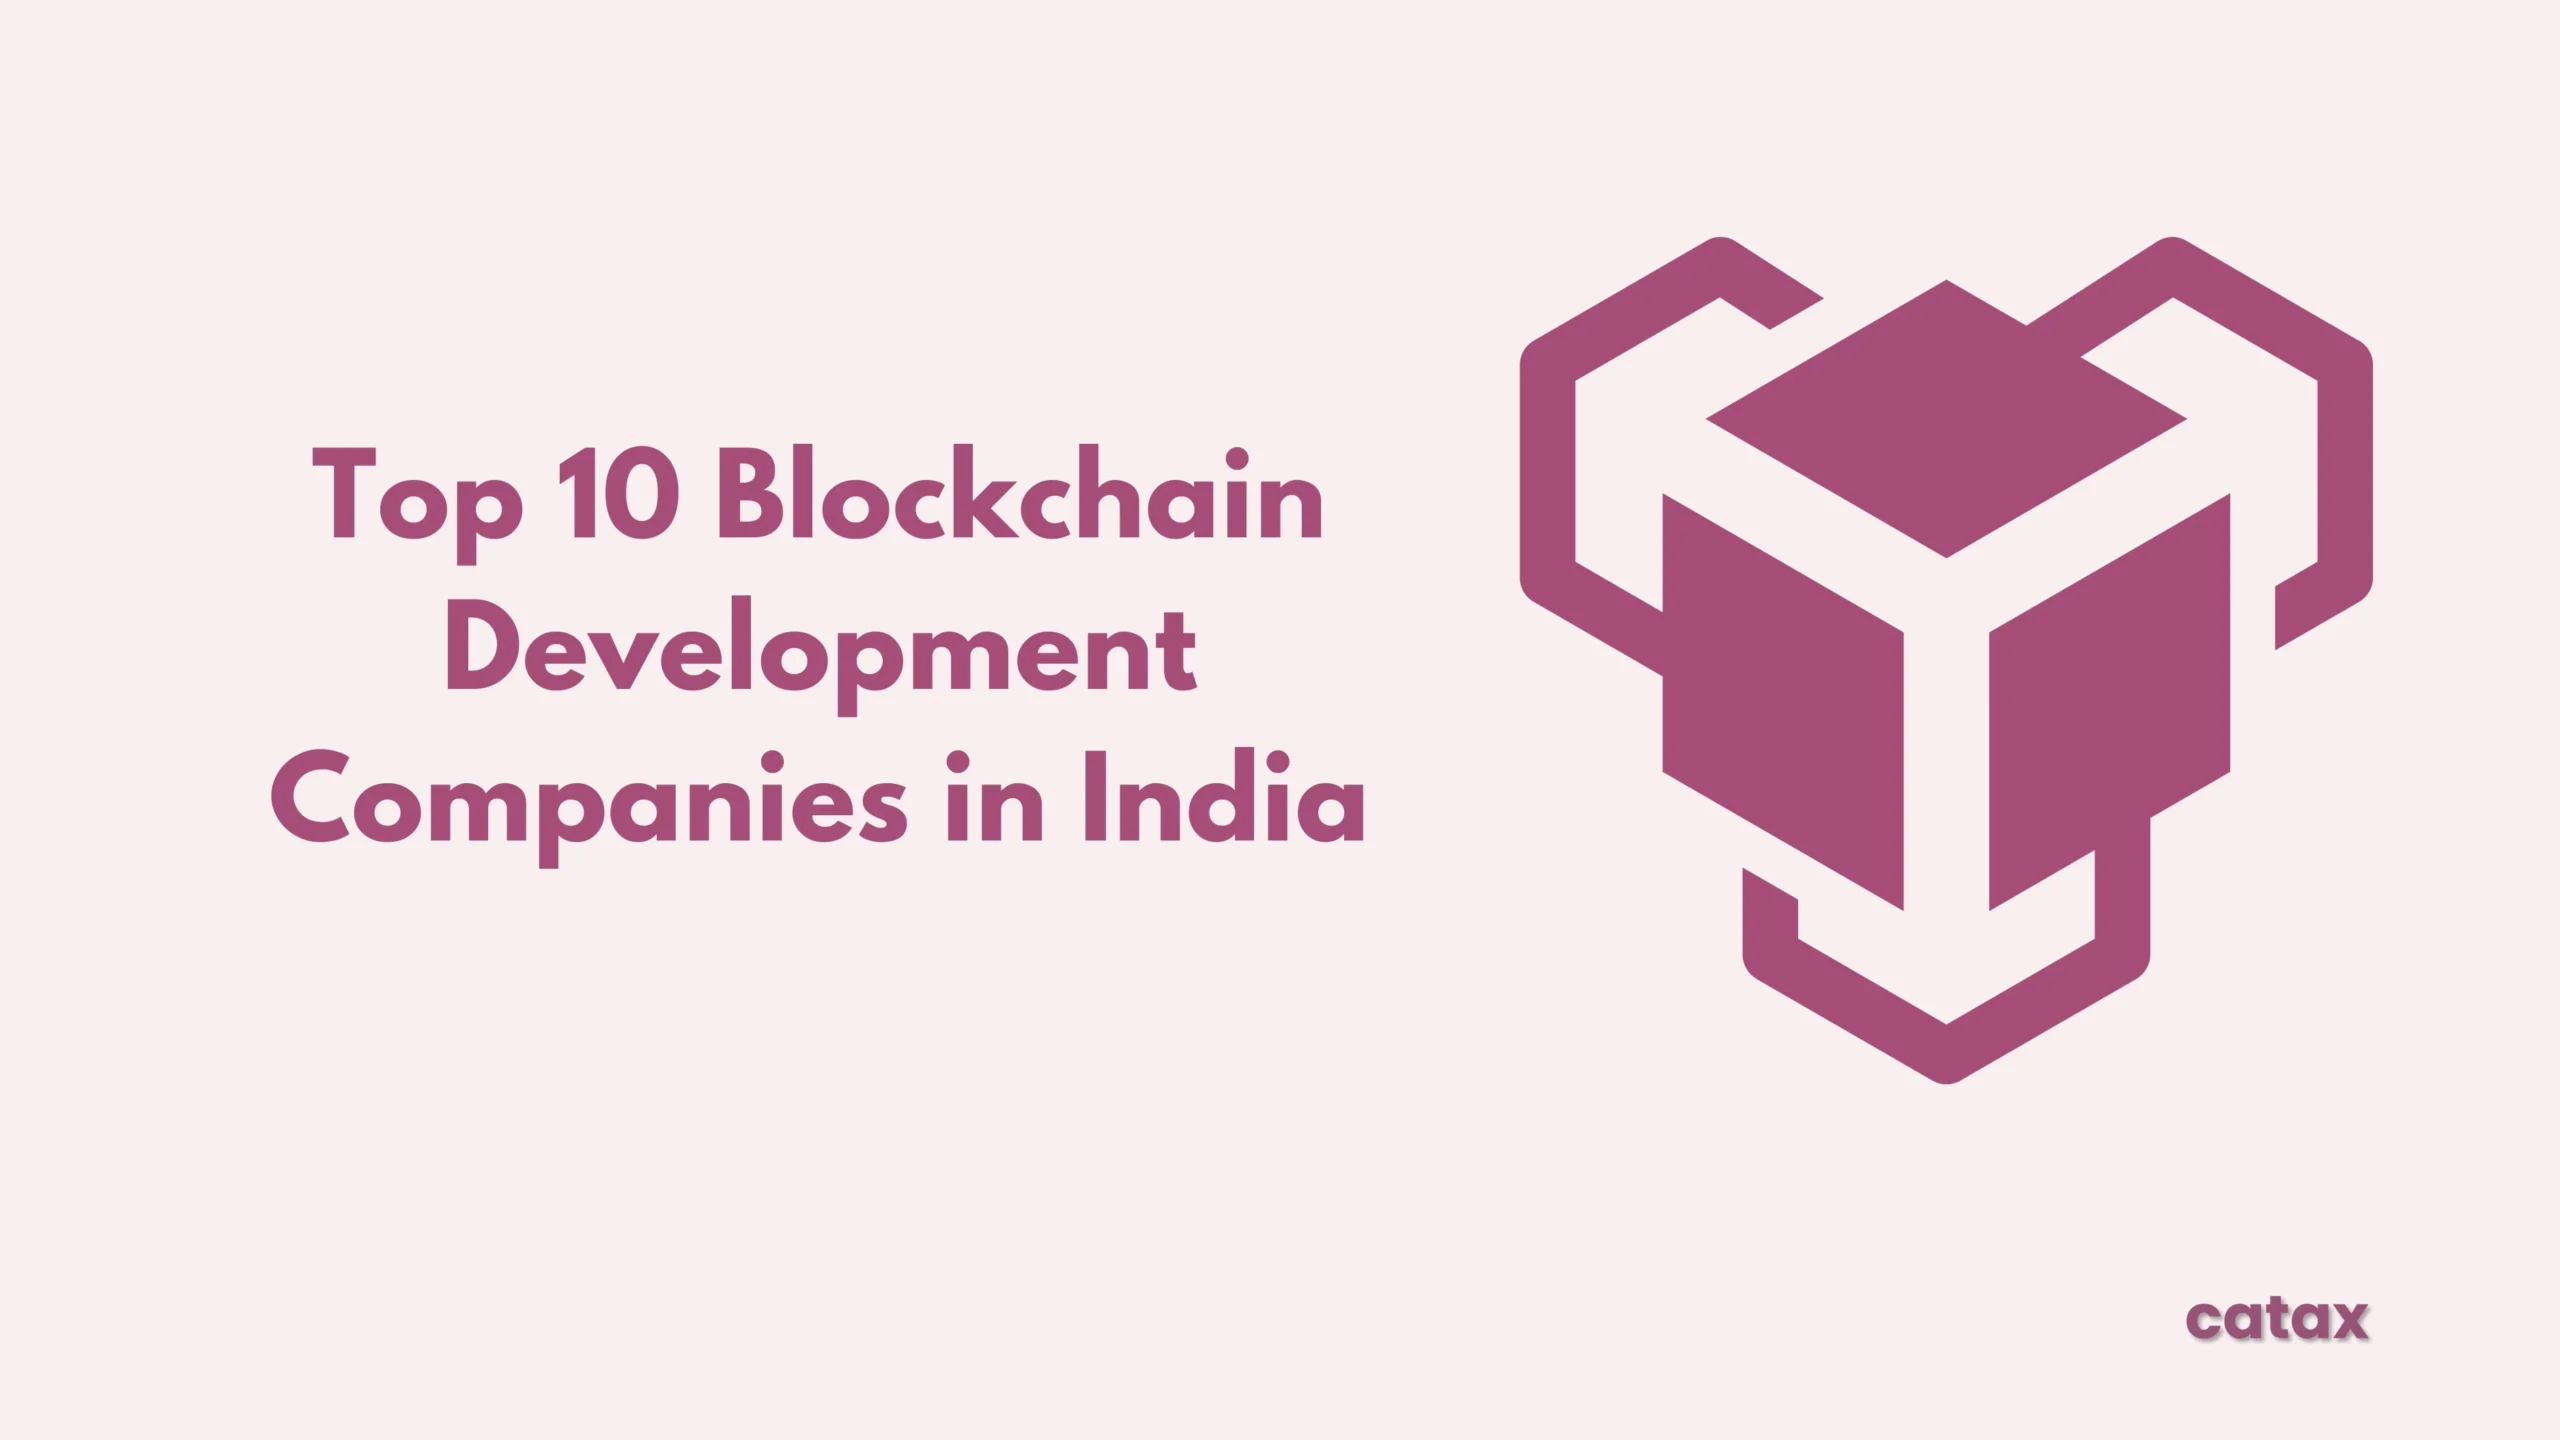 Top 10 Blockchain Development